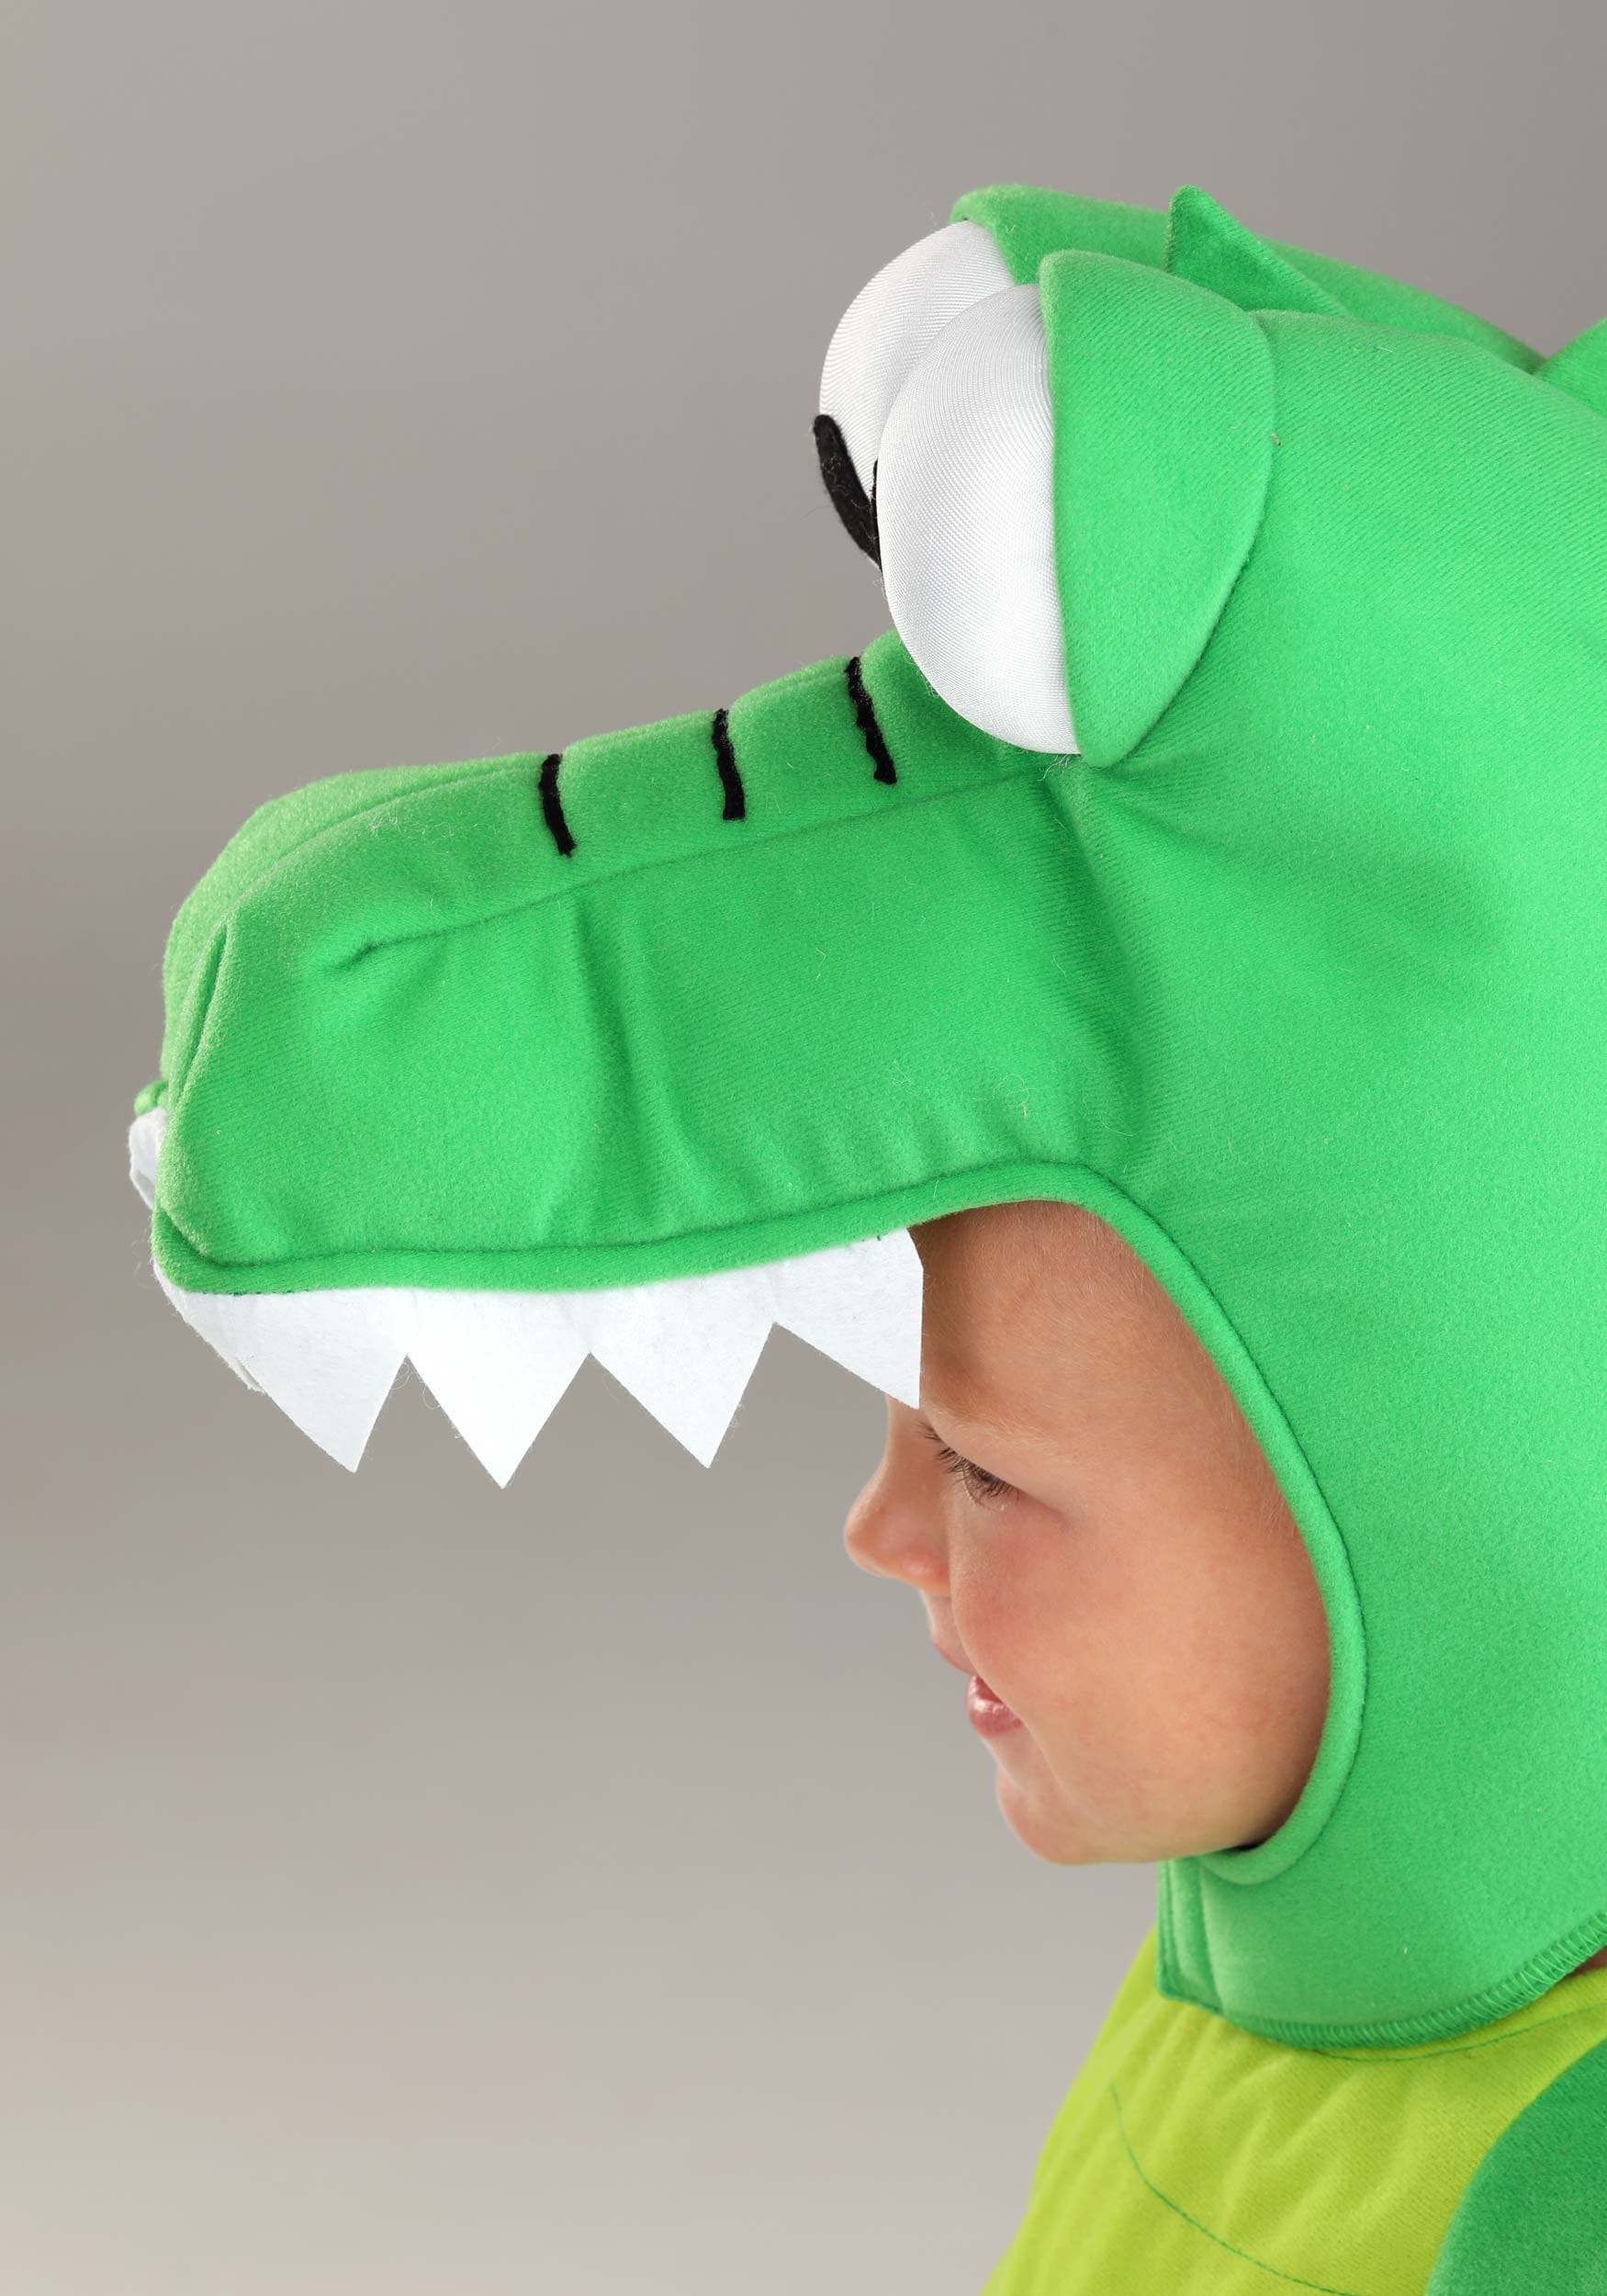 Goofy Gator Toddler Costume